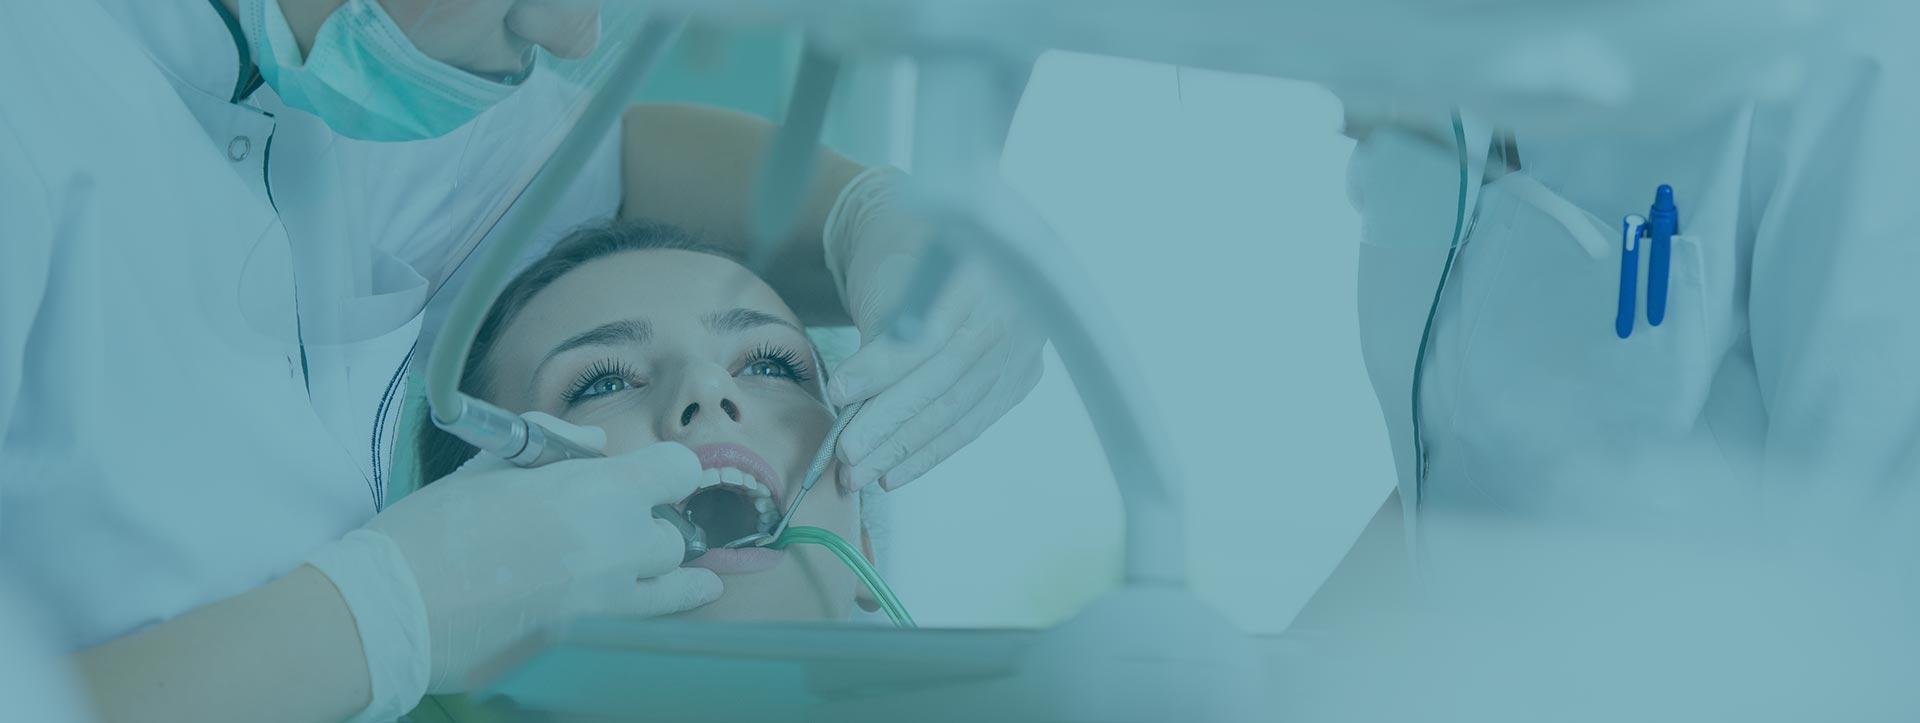 Woman having dental surgery